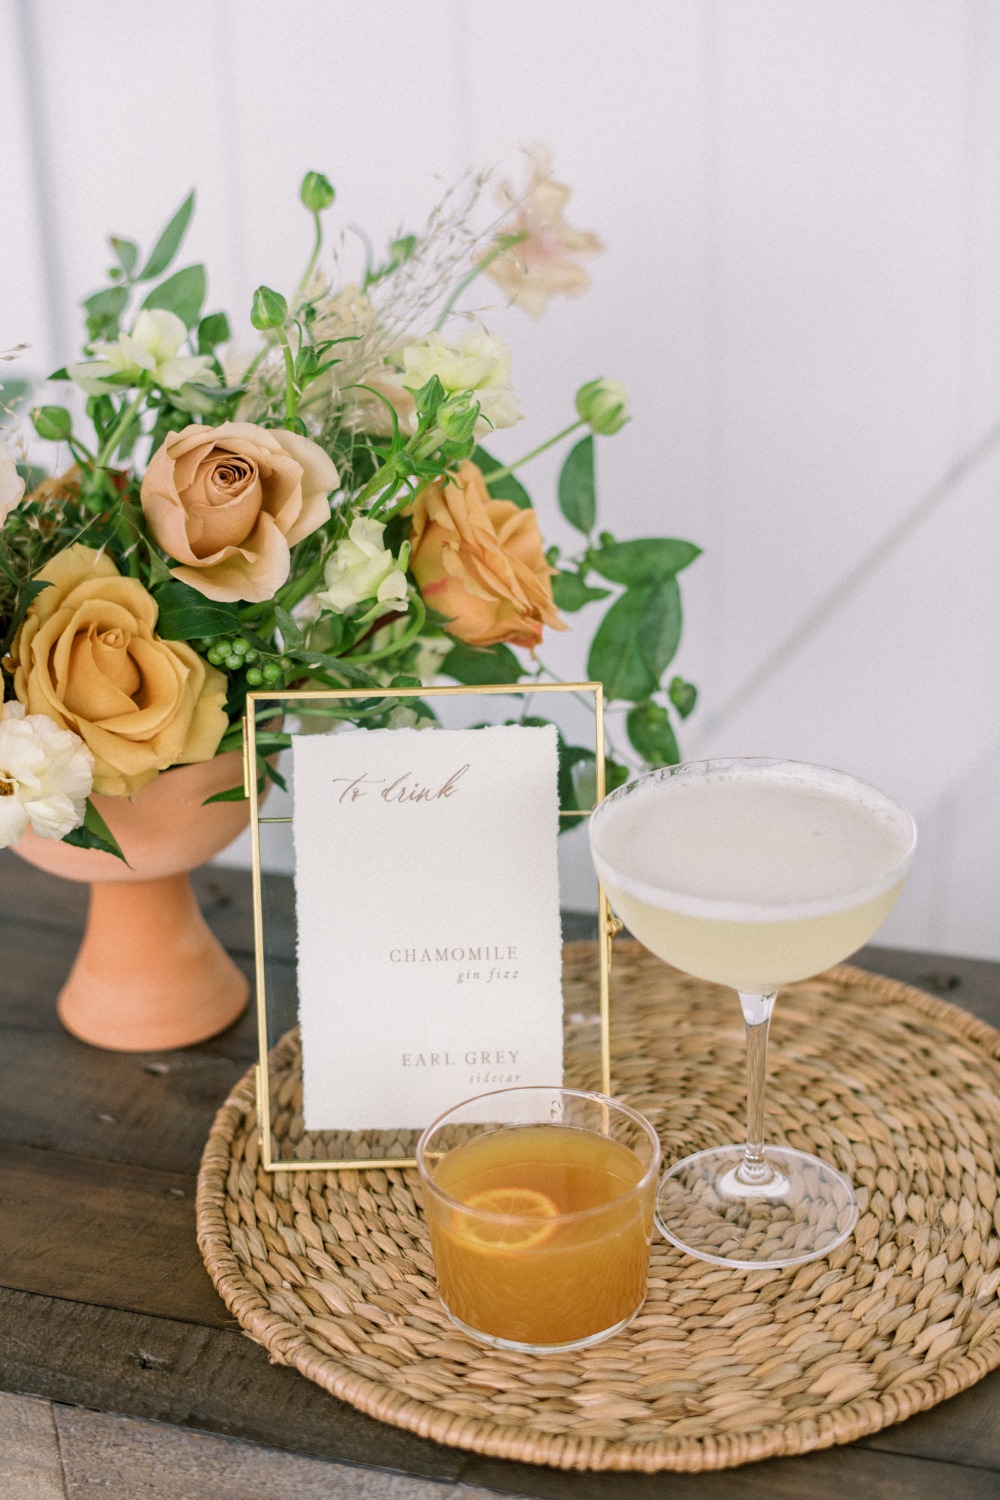 signature wedding drink ideas - Chamomile Gin Fizz and an Earl Grey sidecar